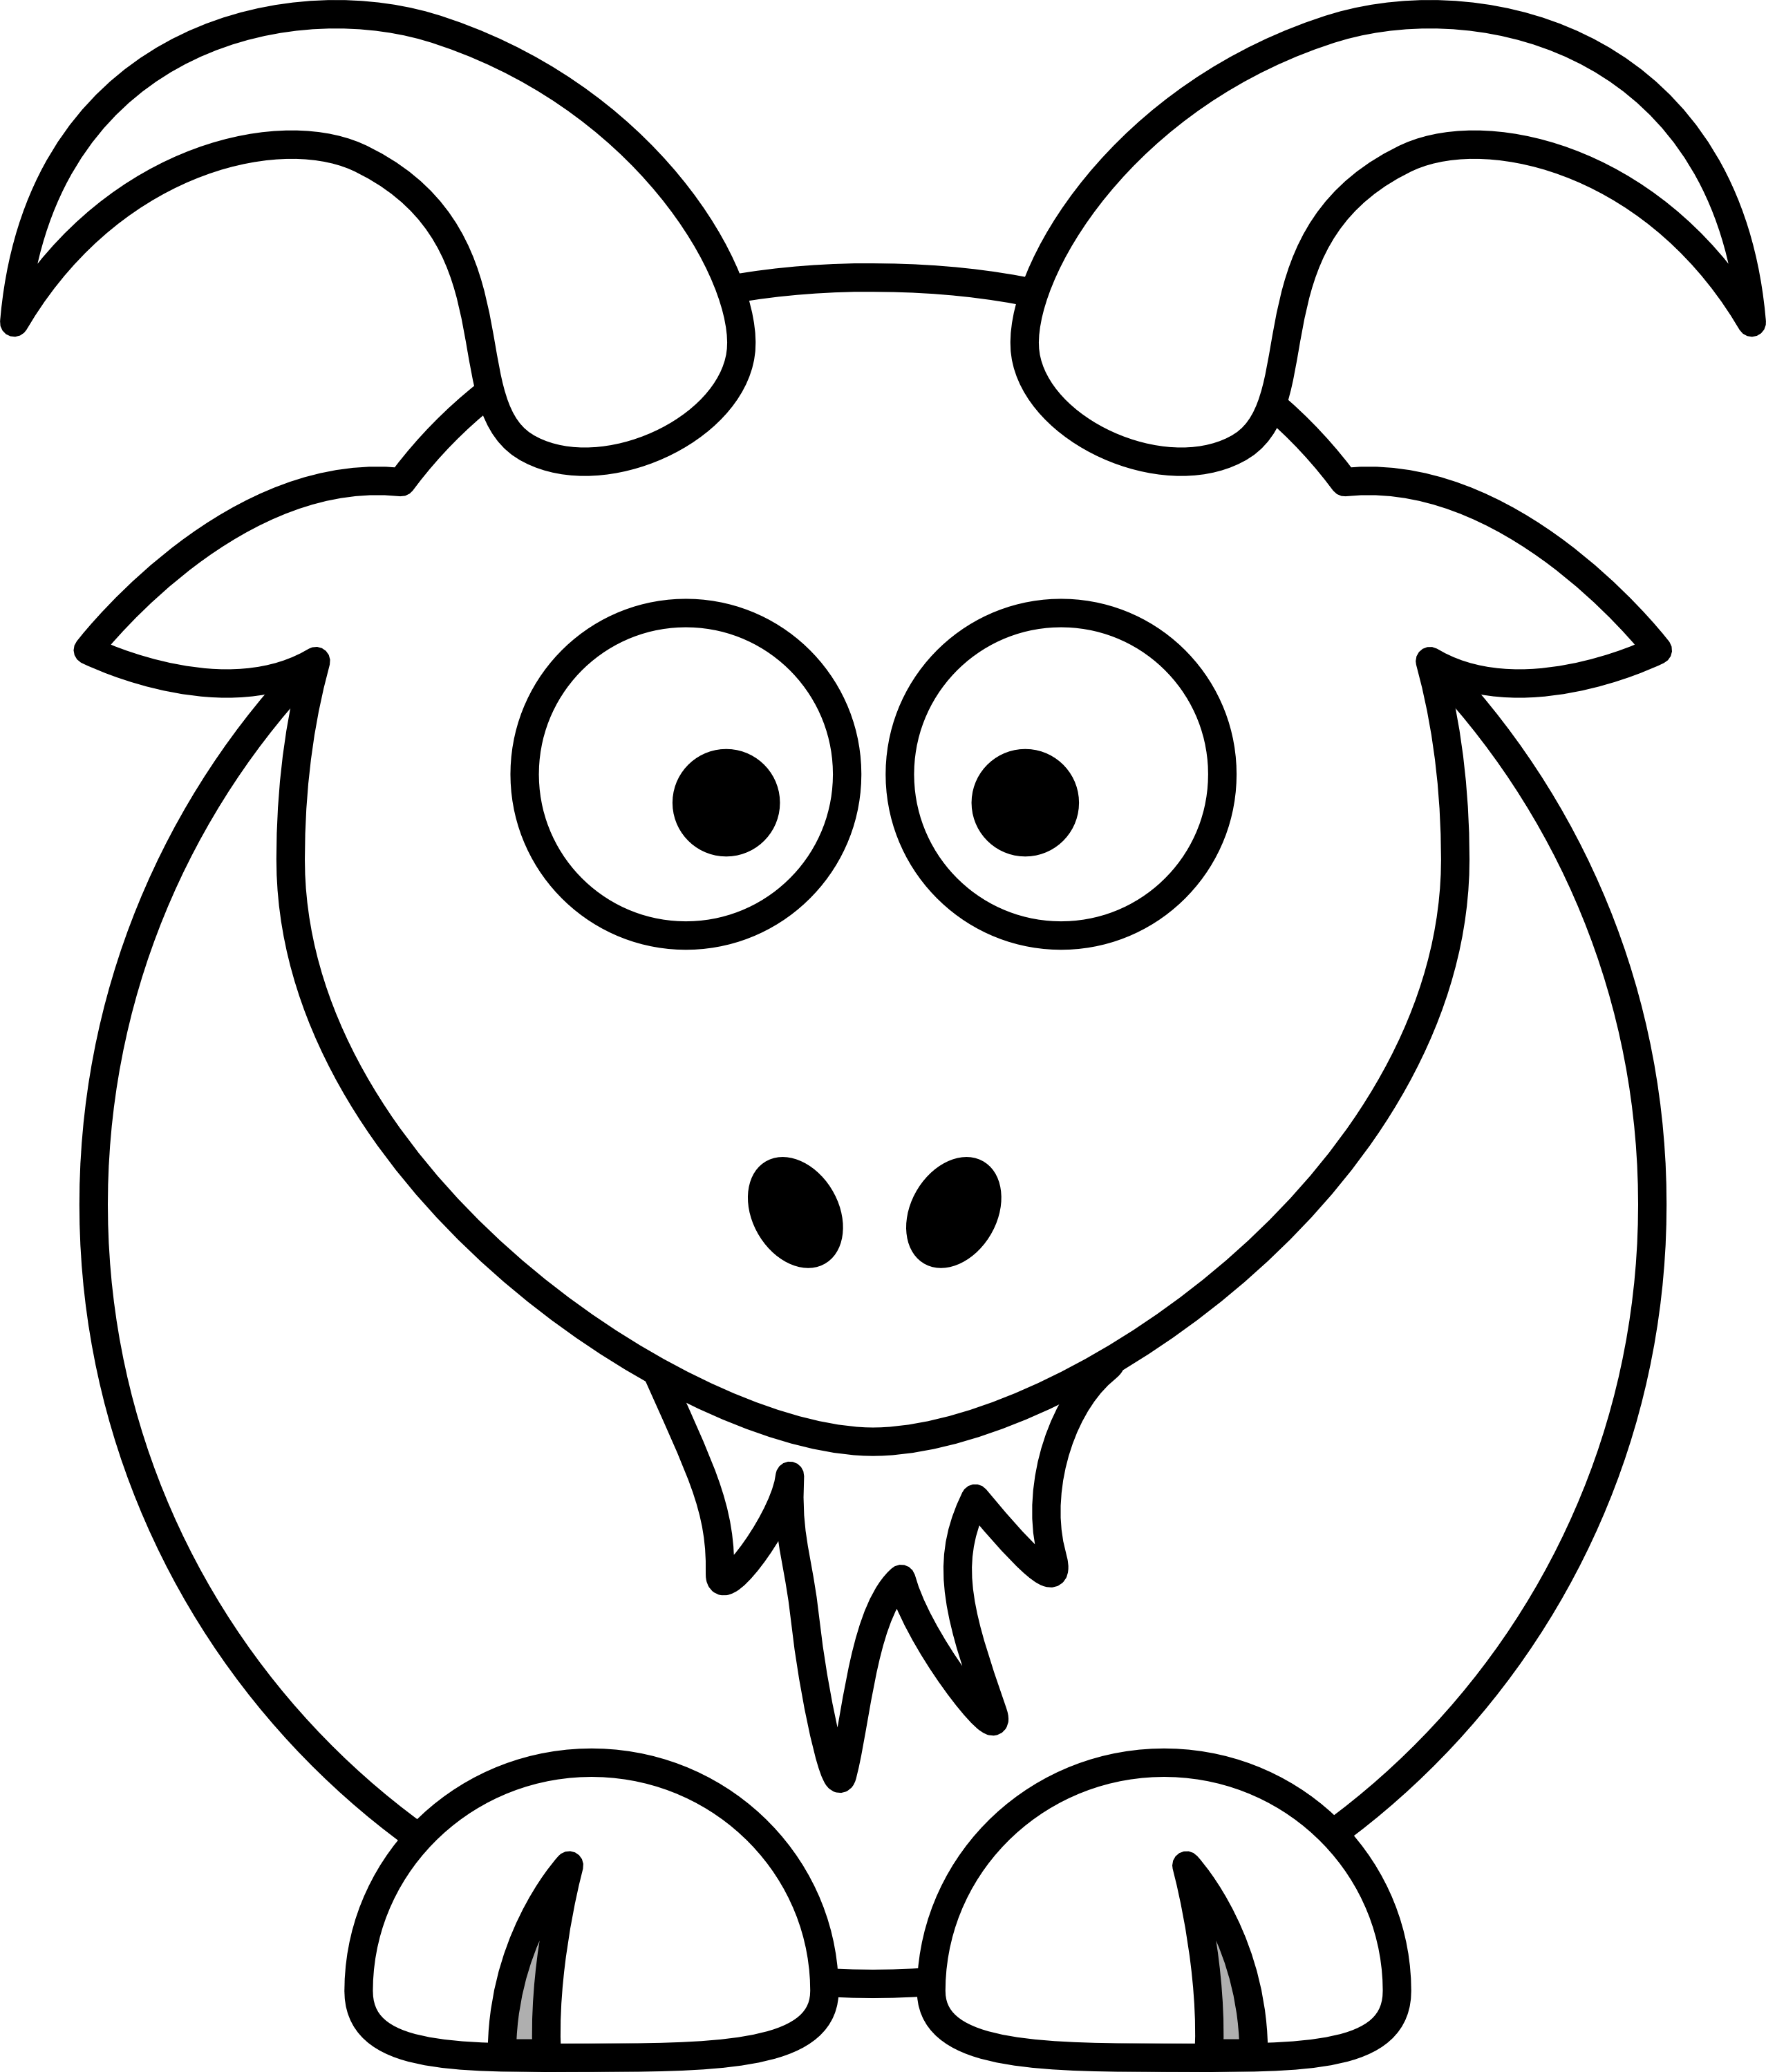 Lamb drawing at getdrawings. Clipart sheep simple